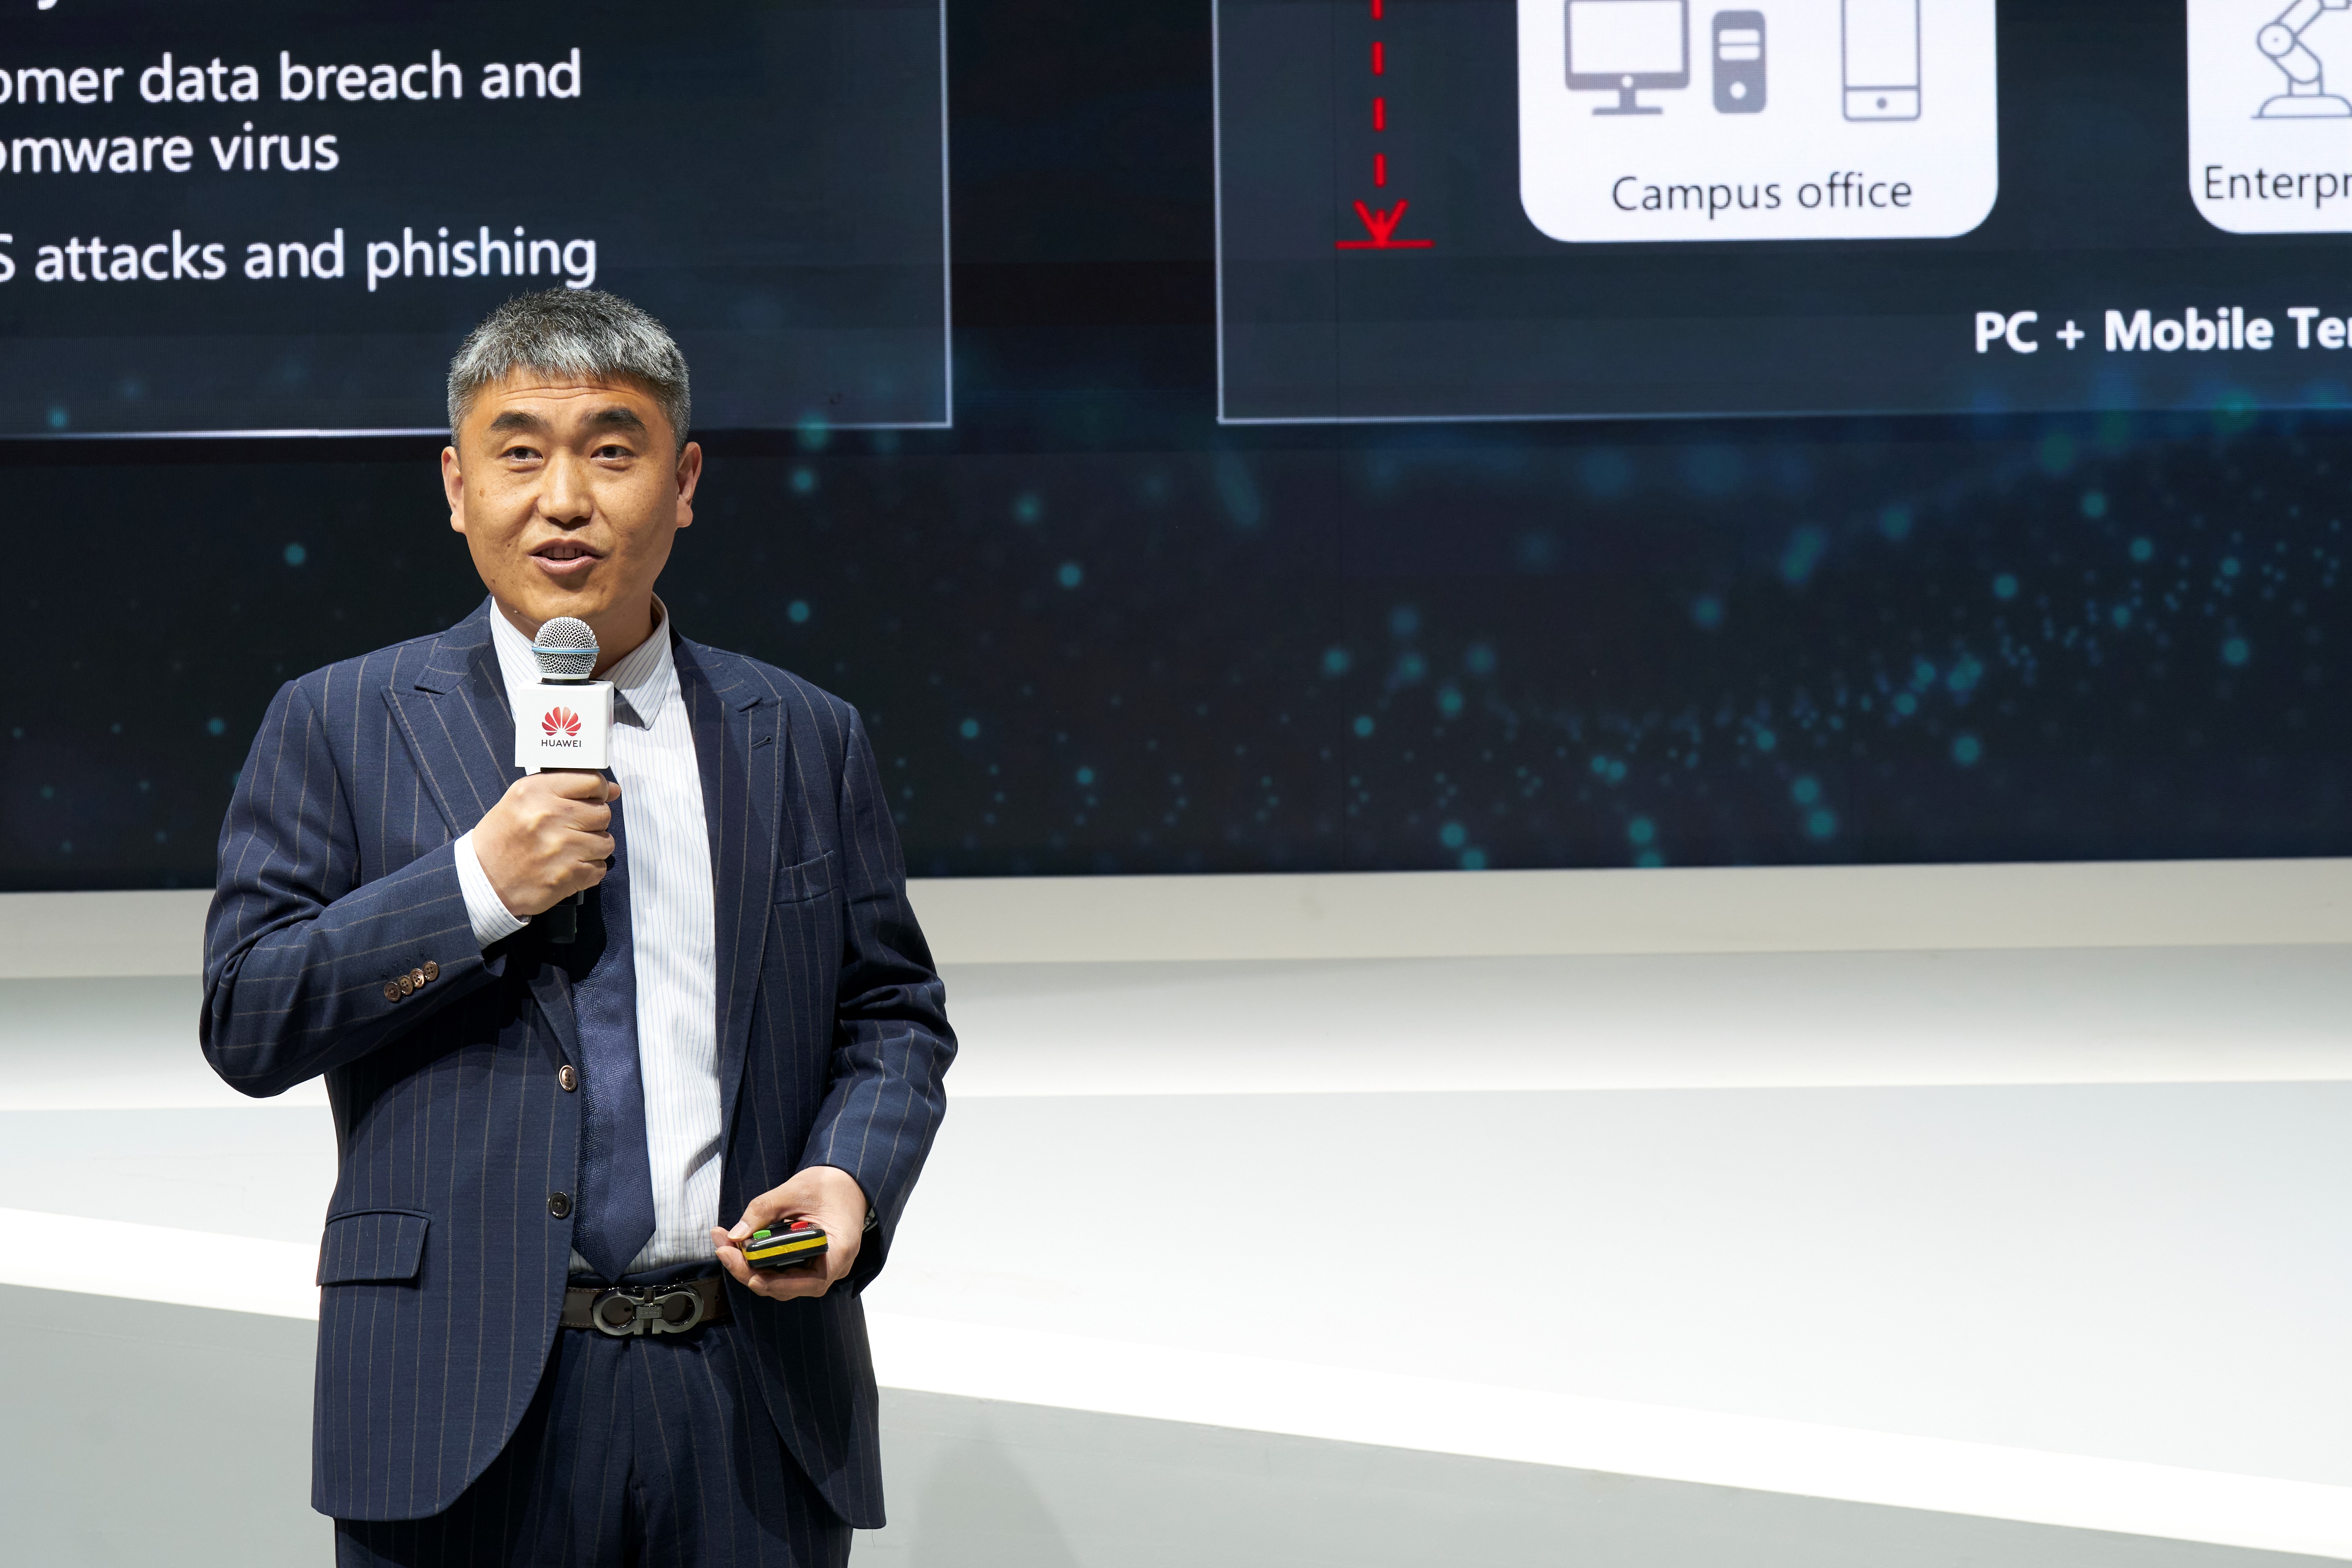 Mr. Garry Geng, Director of Huawei Enterprise Network Integration Service, gave the presentation of the solution